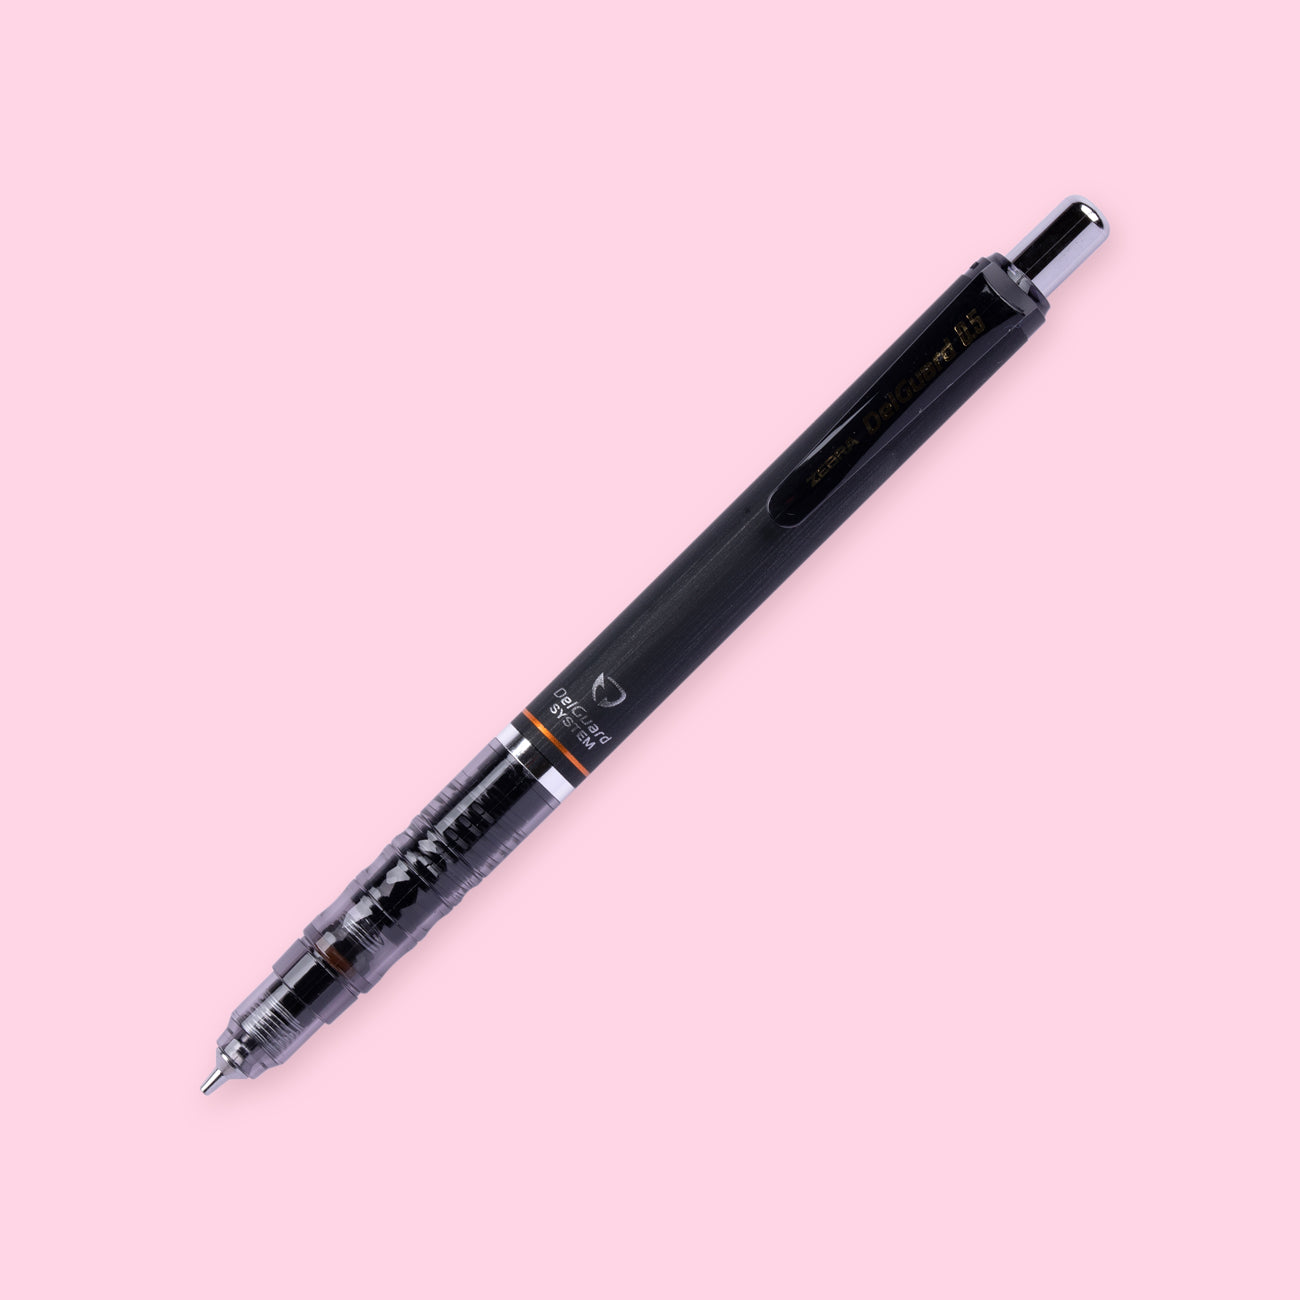 Zebra DelGuard Mechanical Pencil - 0.5 mm - Black